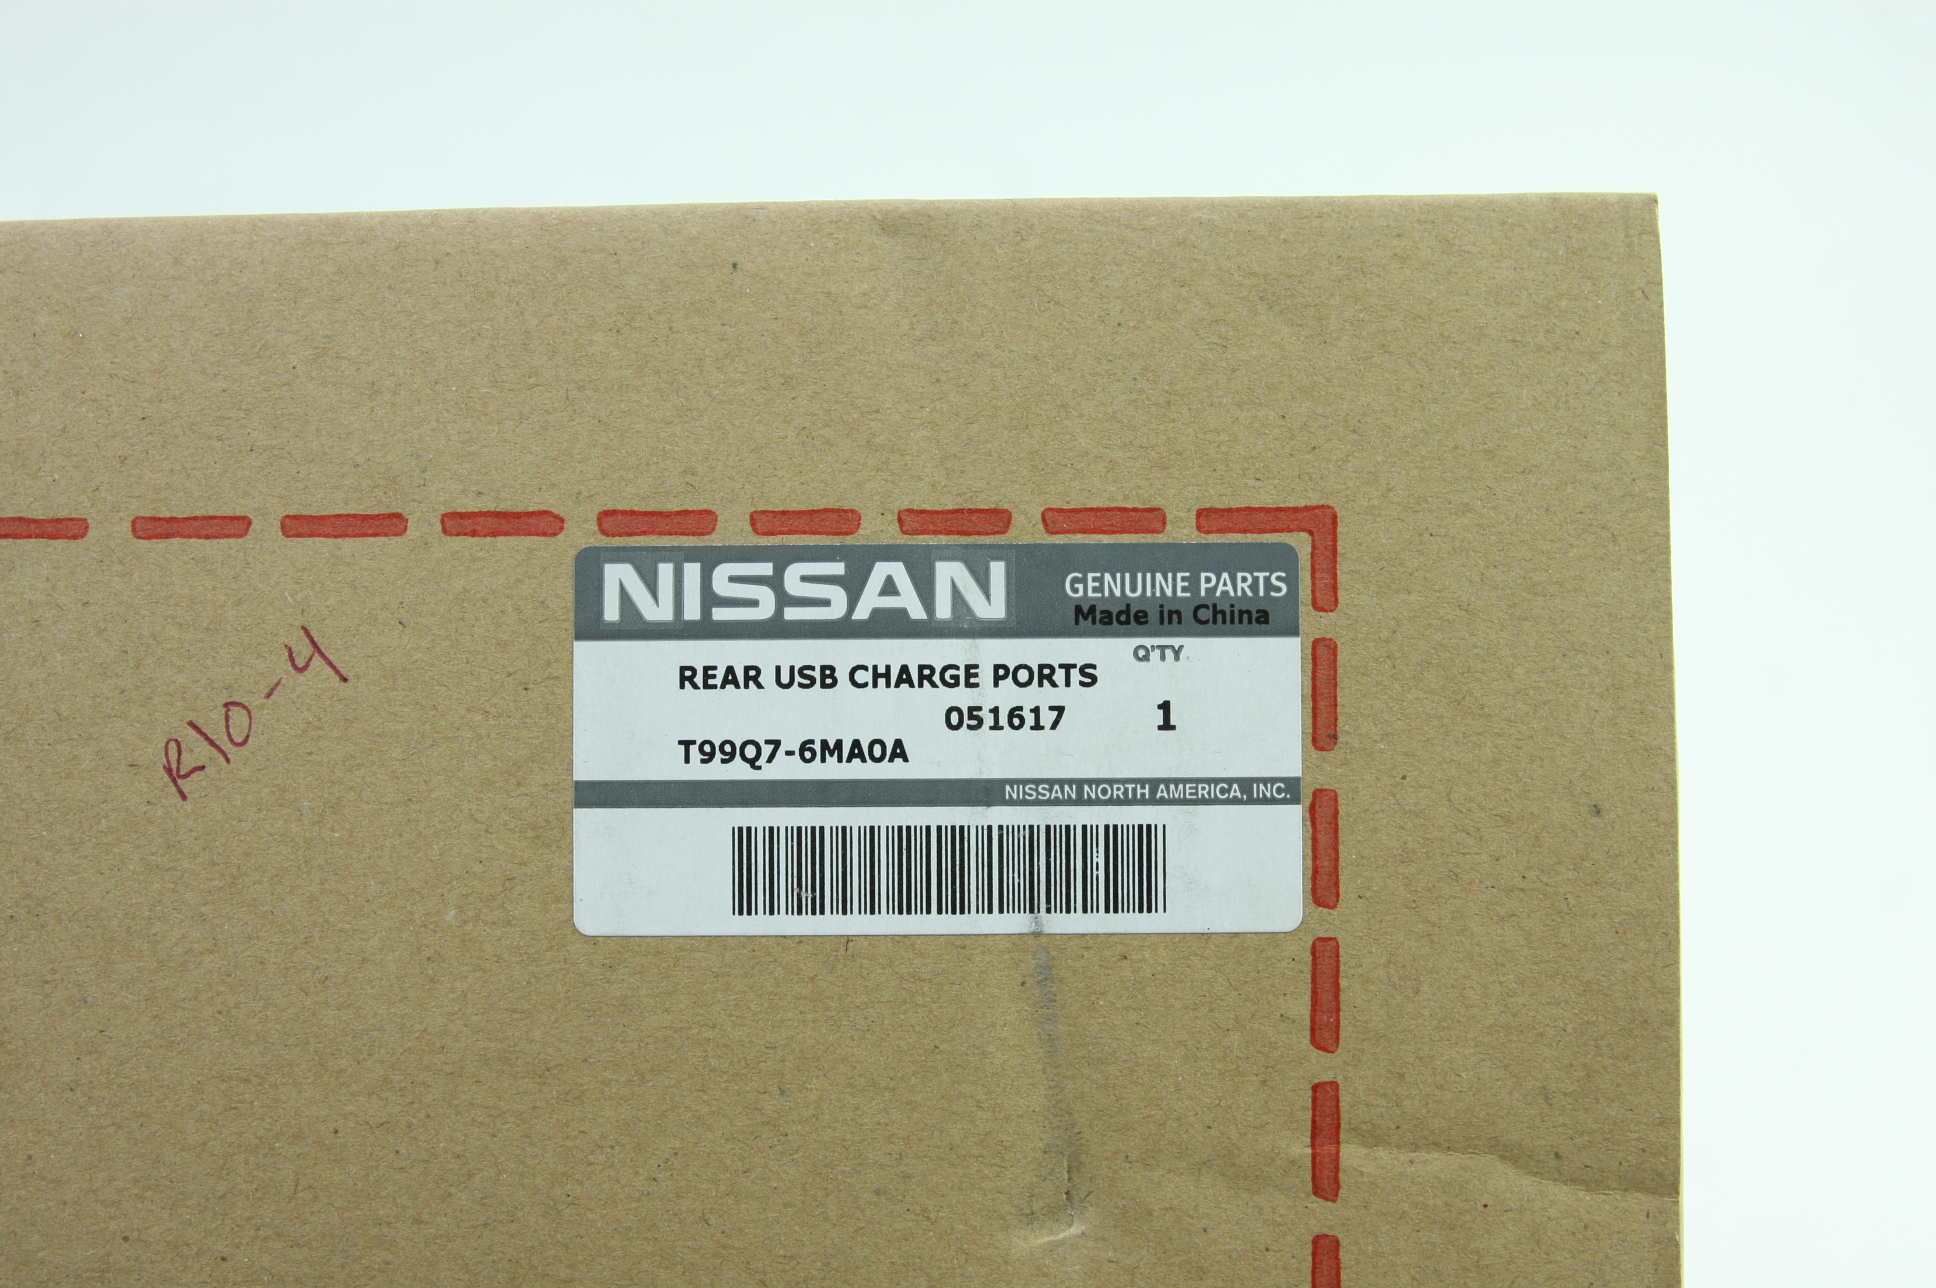 Genuine Nissan Rear USB Charging Ports New OEM T99Q7-6MA0A Fast Free Shipping - image 4